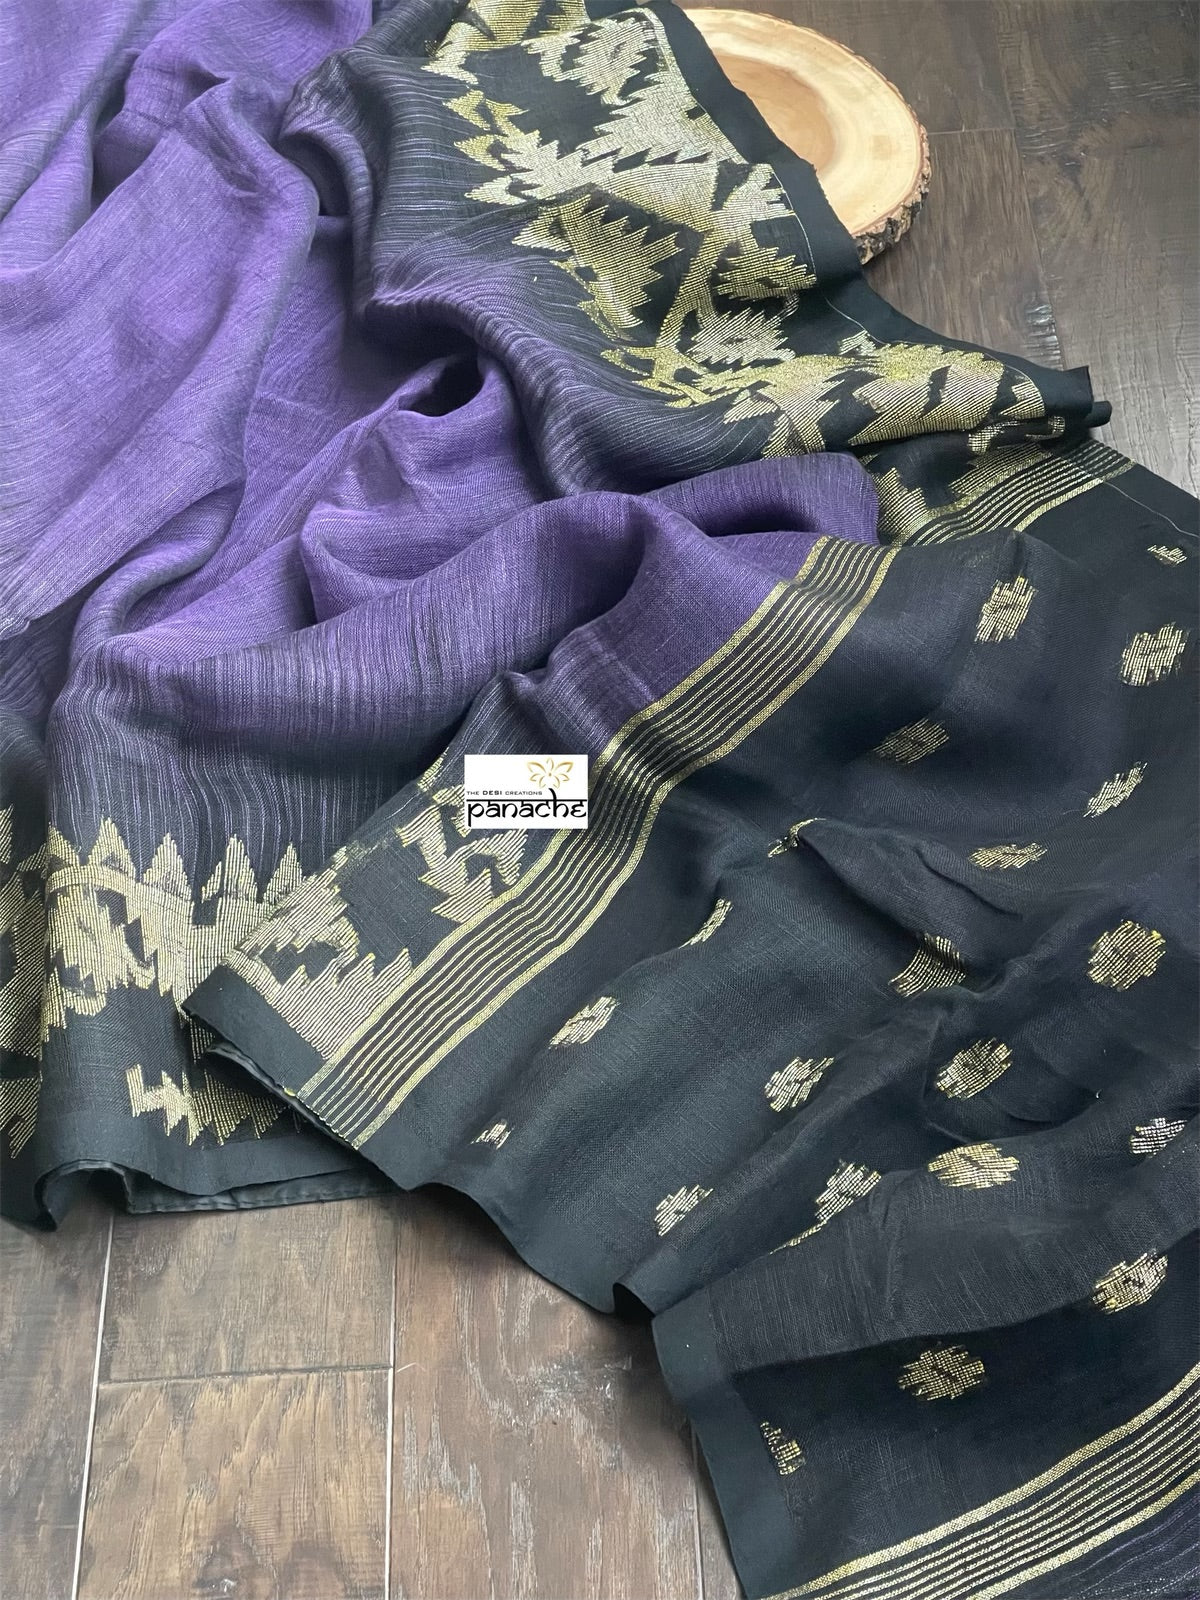 Handloom Banarasi Linen - Purple Black